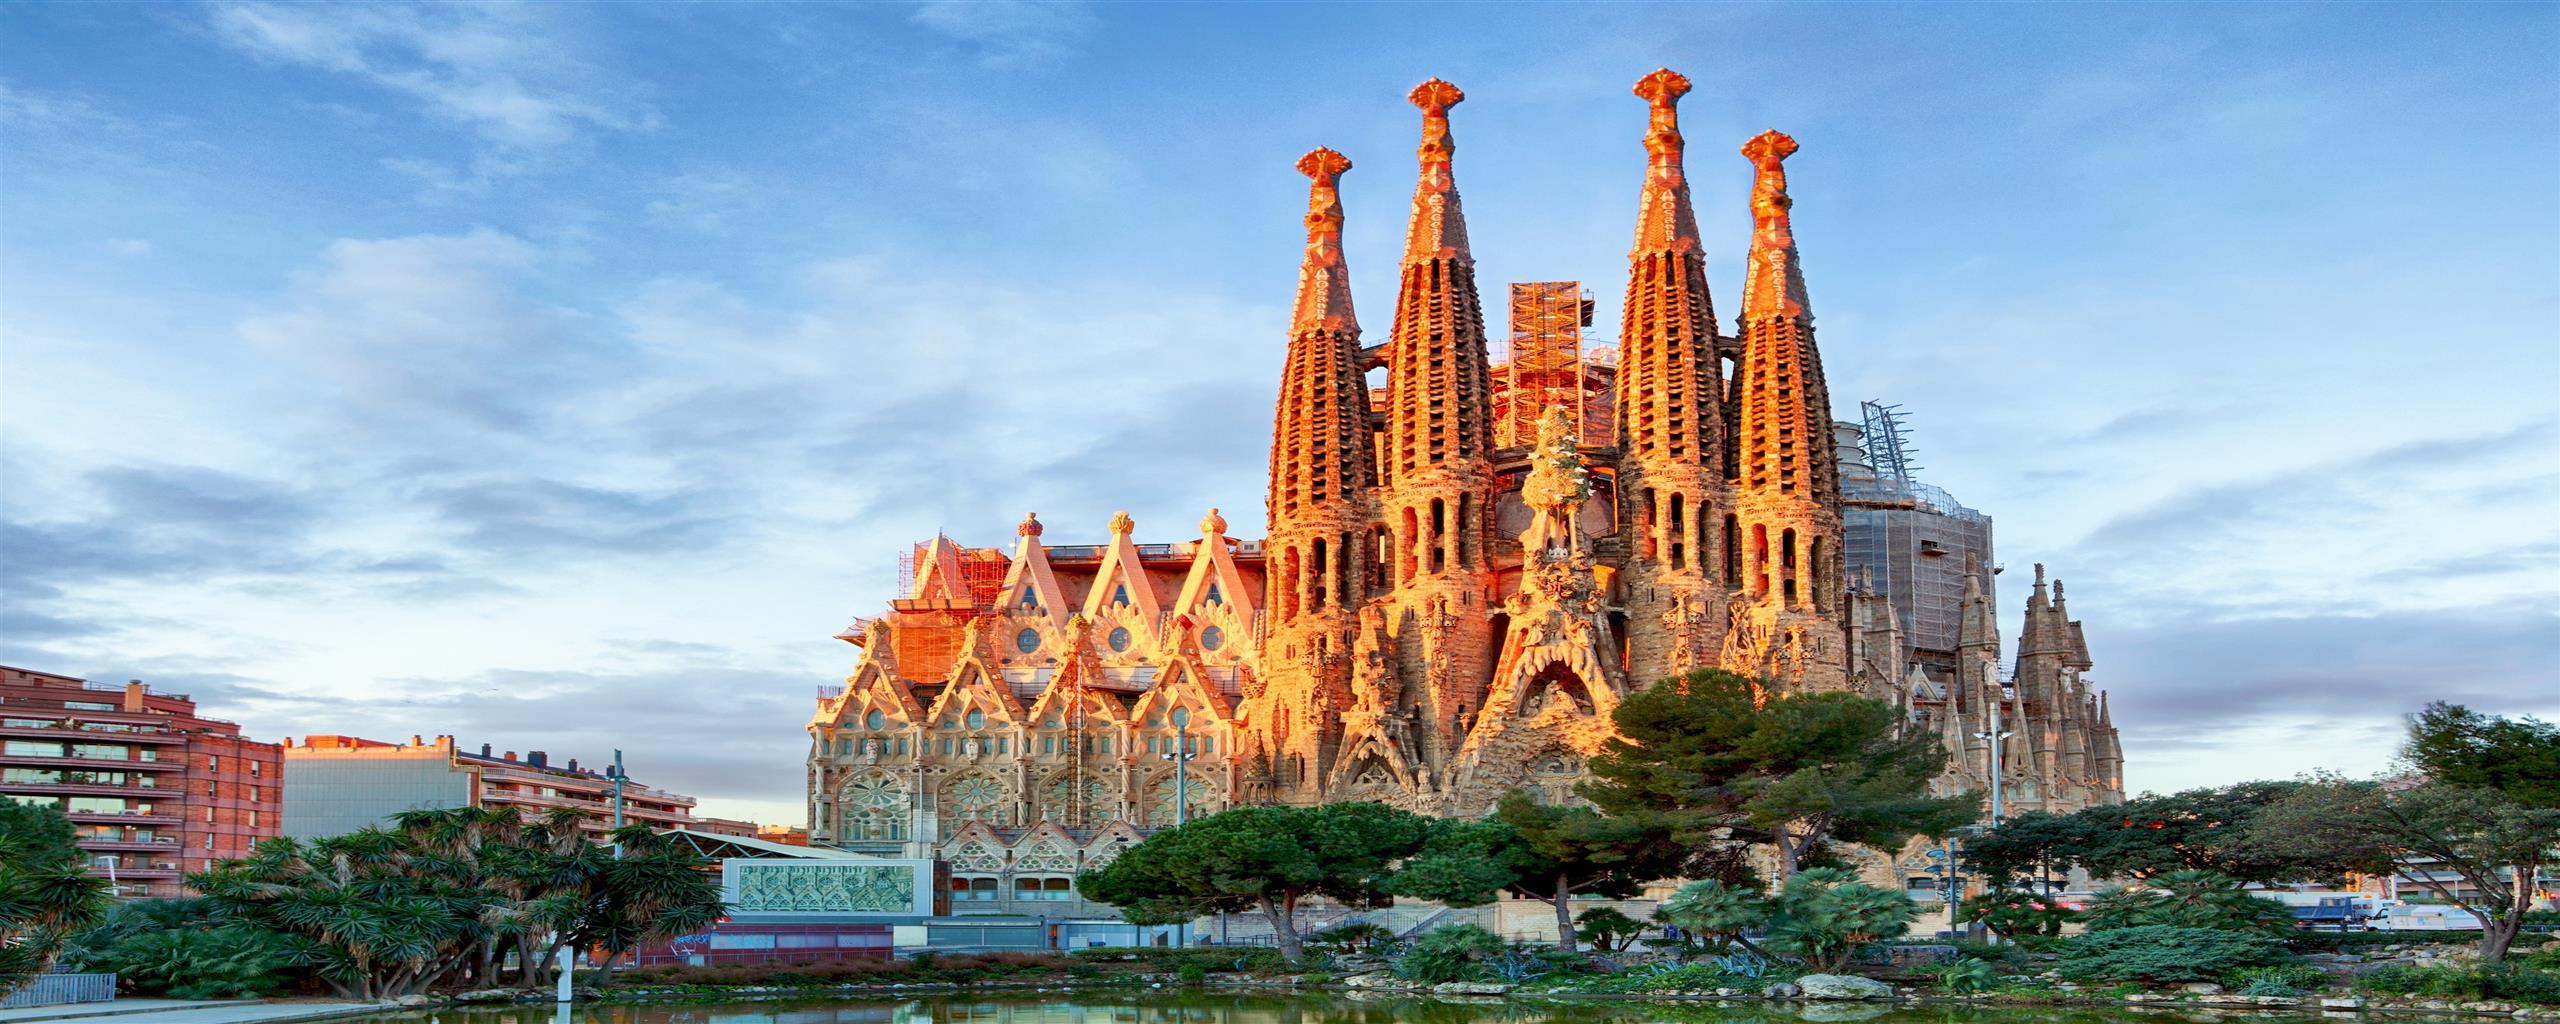 Sagrada Familia Wallpapers - Top Free Sagrada Familia Backgrounds ...